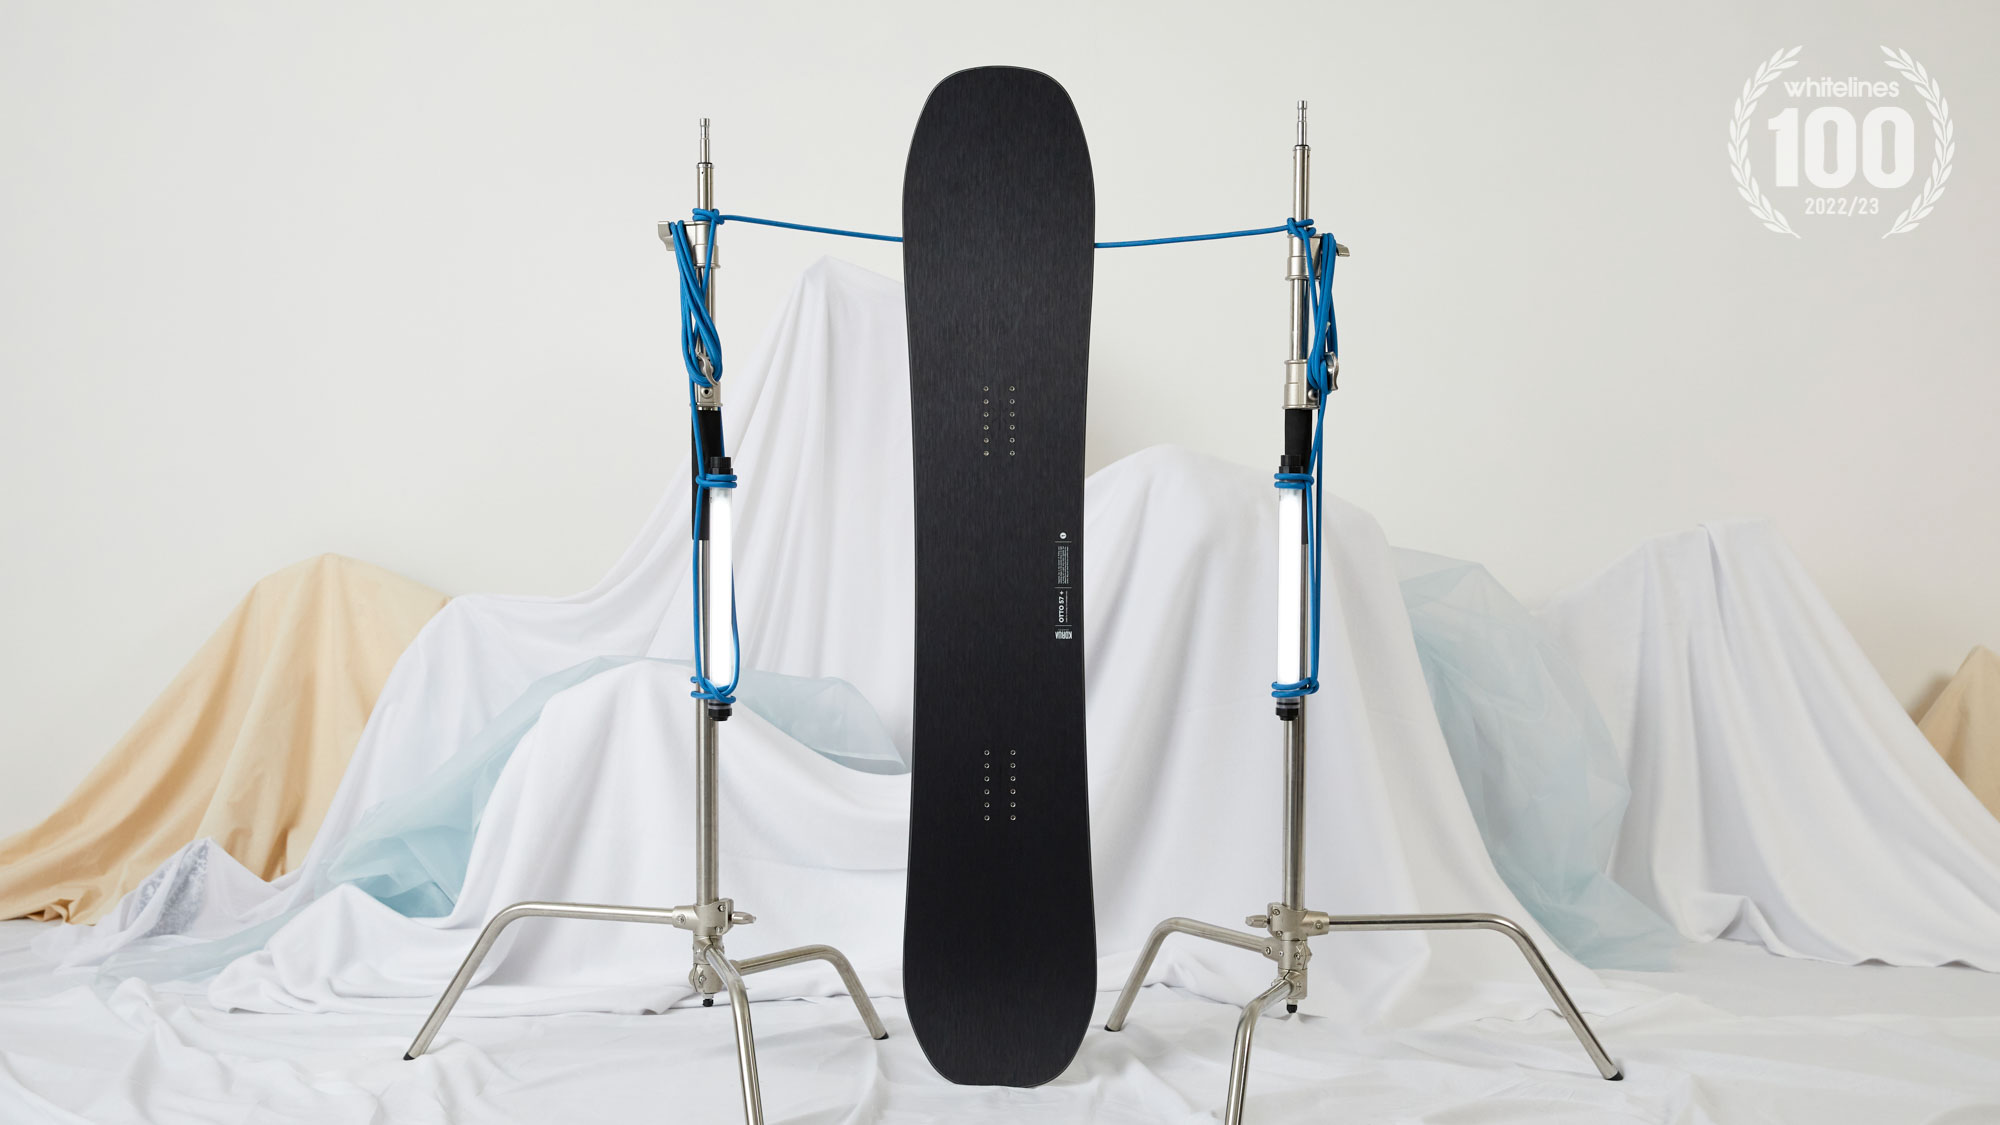 Korua Shapes Otto Plus Snowboard, Men's Snowboards